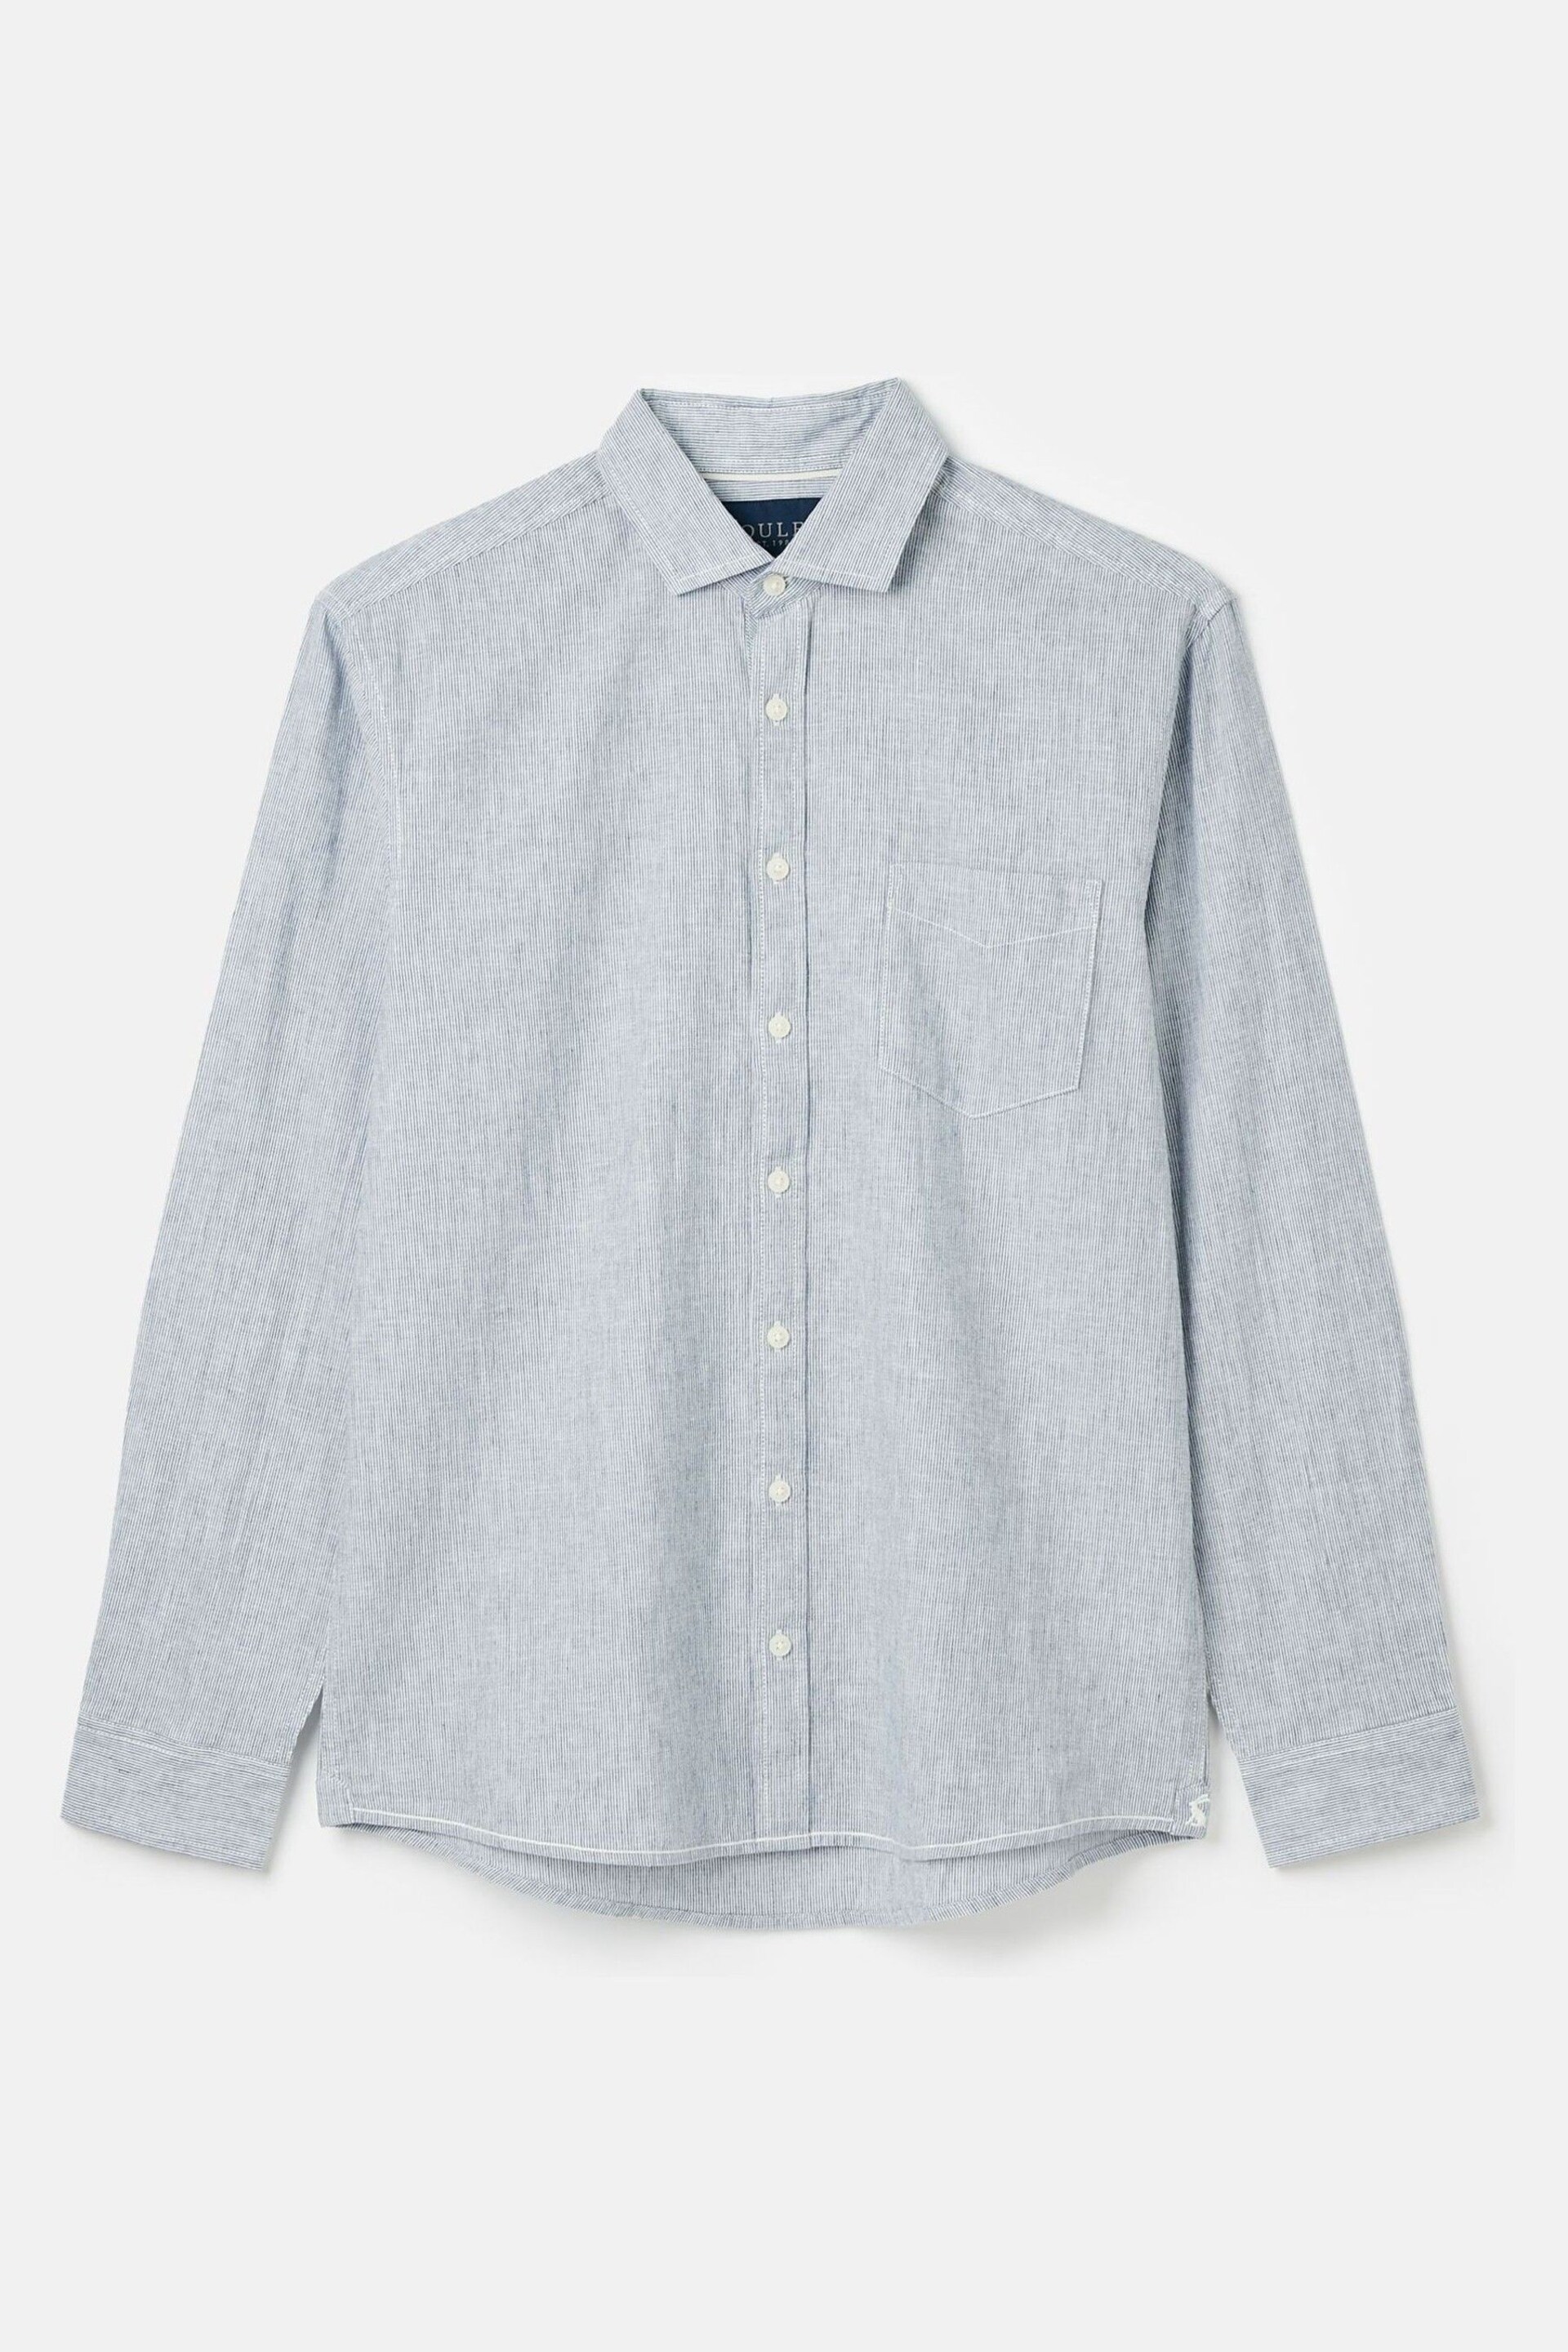 Joules Linen Blend Blue Stripe Plain Long Sleeve Shirt - Image 6 of 7